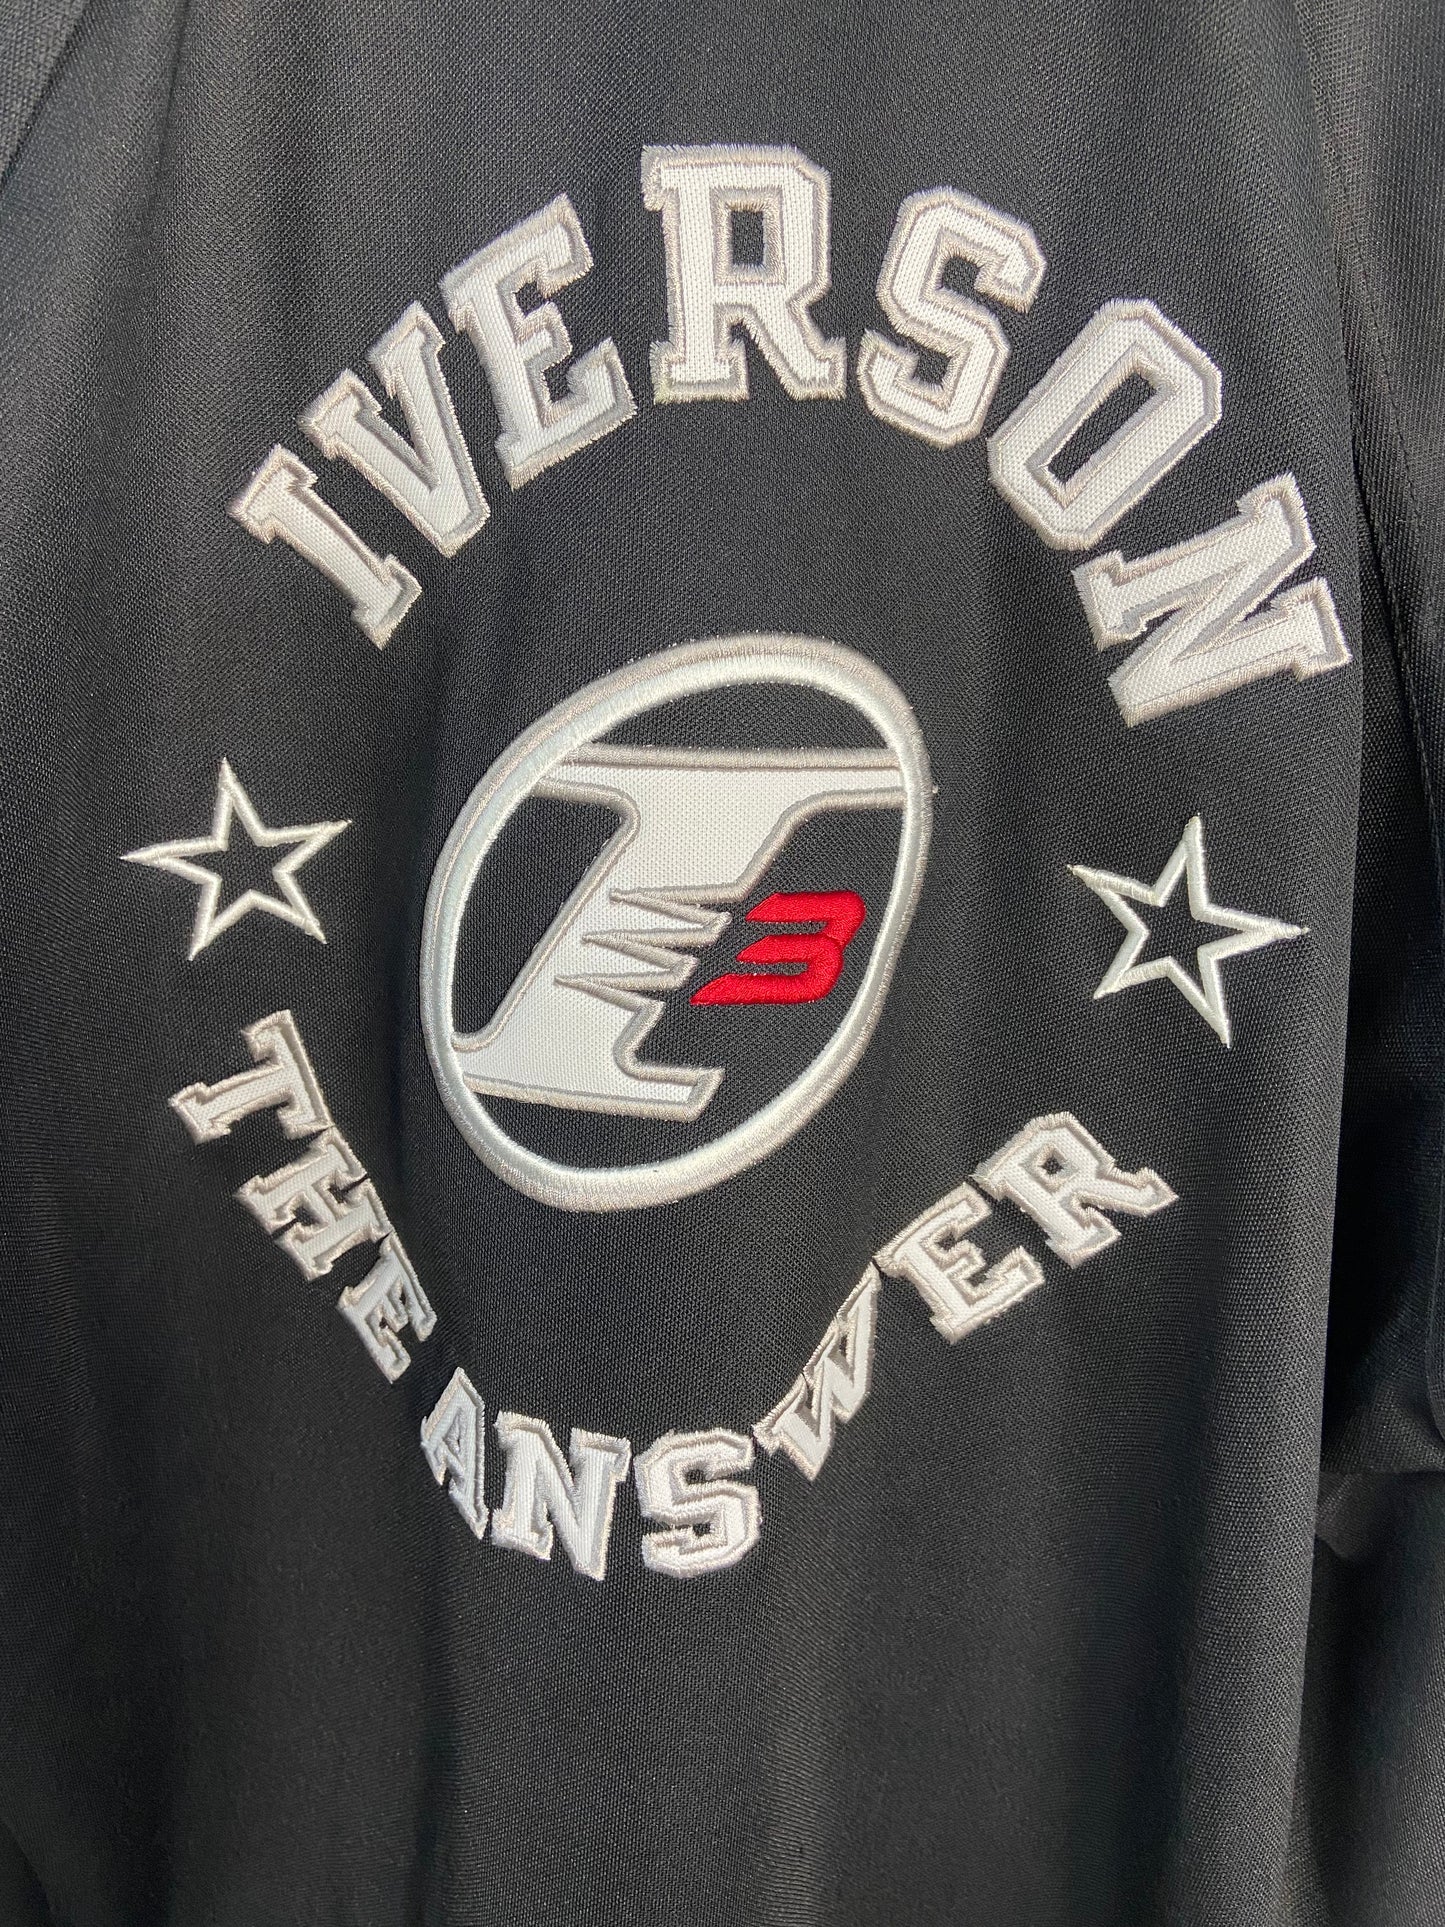 VTG Allen Iverson Is The Answer Jersey Button Up Sz L